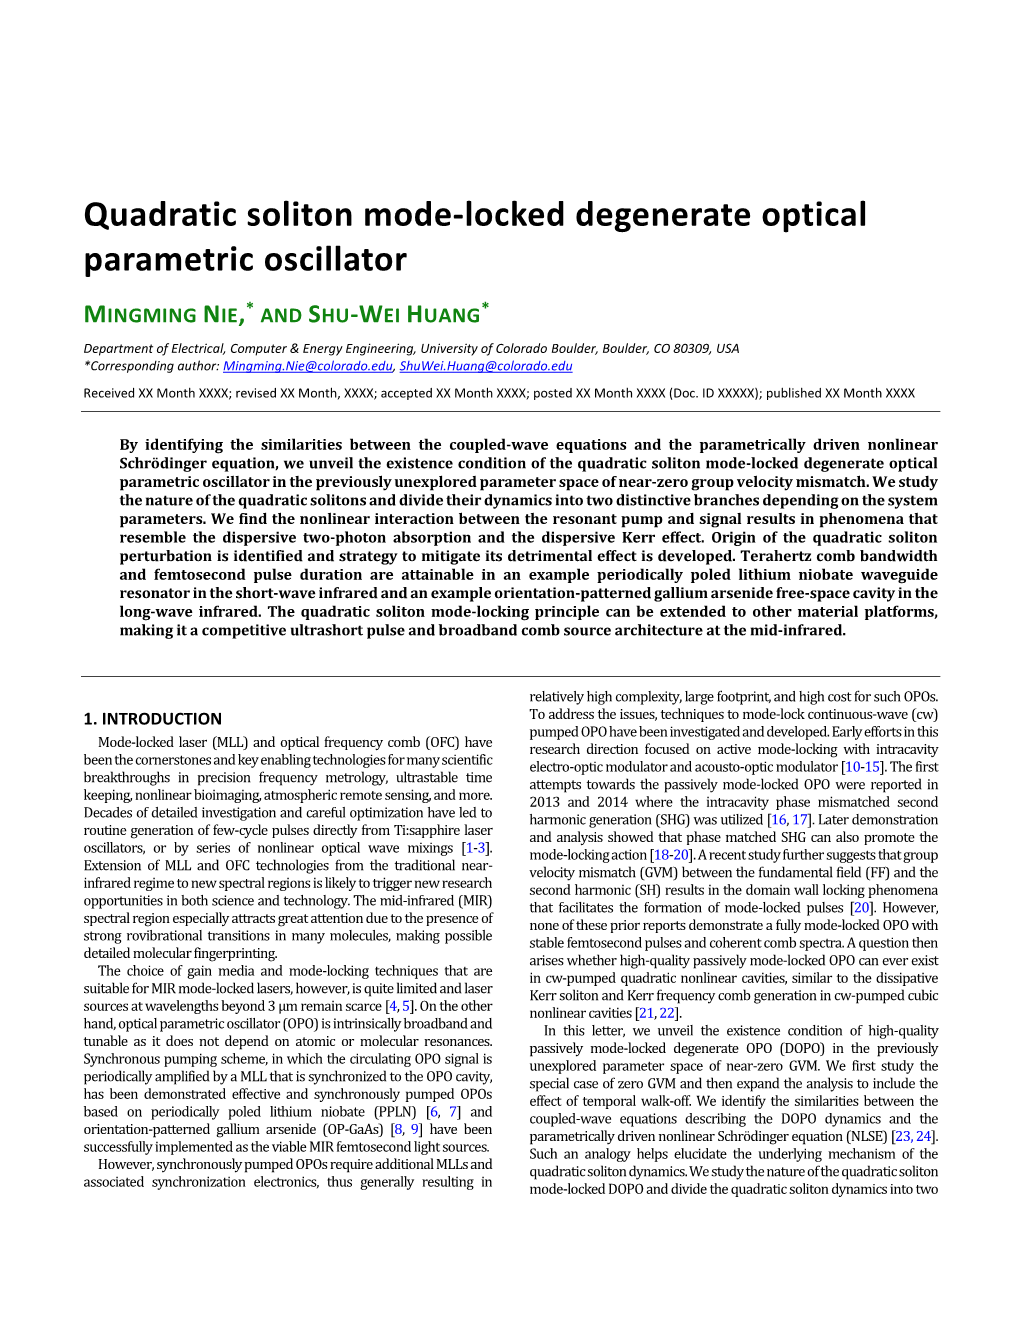 Quadratic Soliton Mode-Locked Degenerate Optical Parametric Oscillator